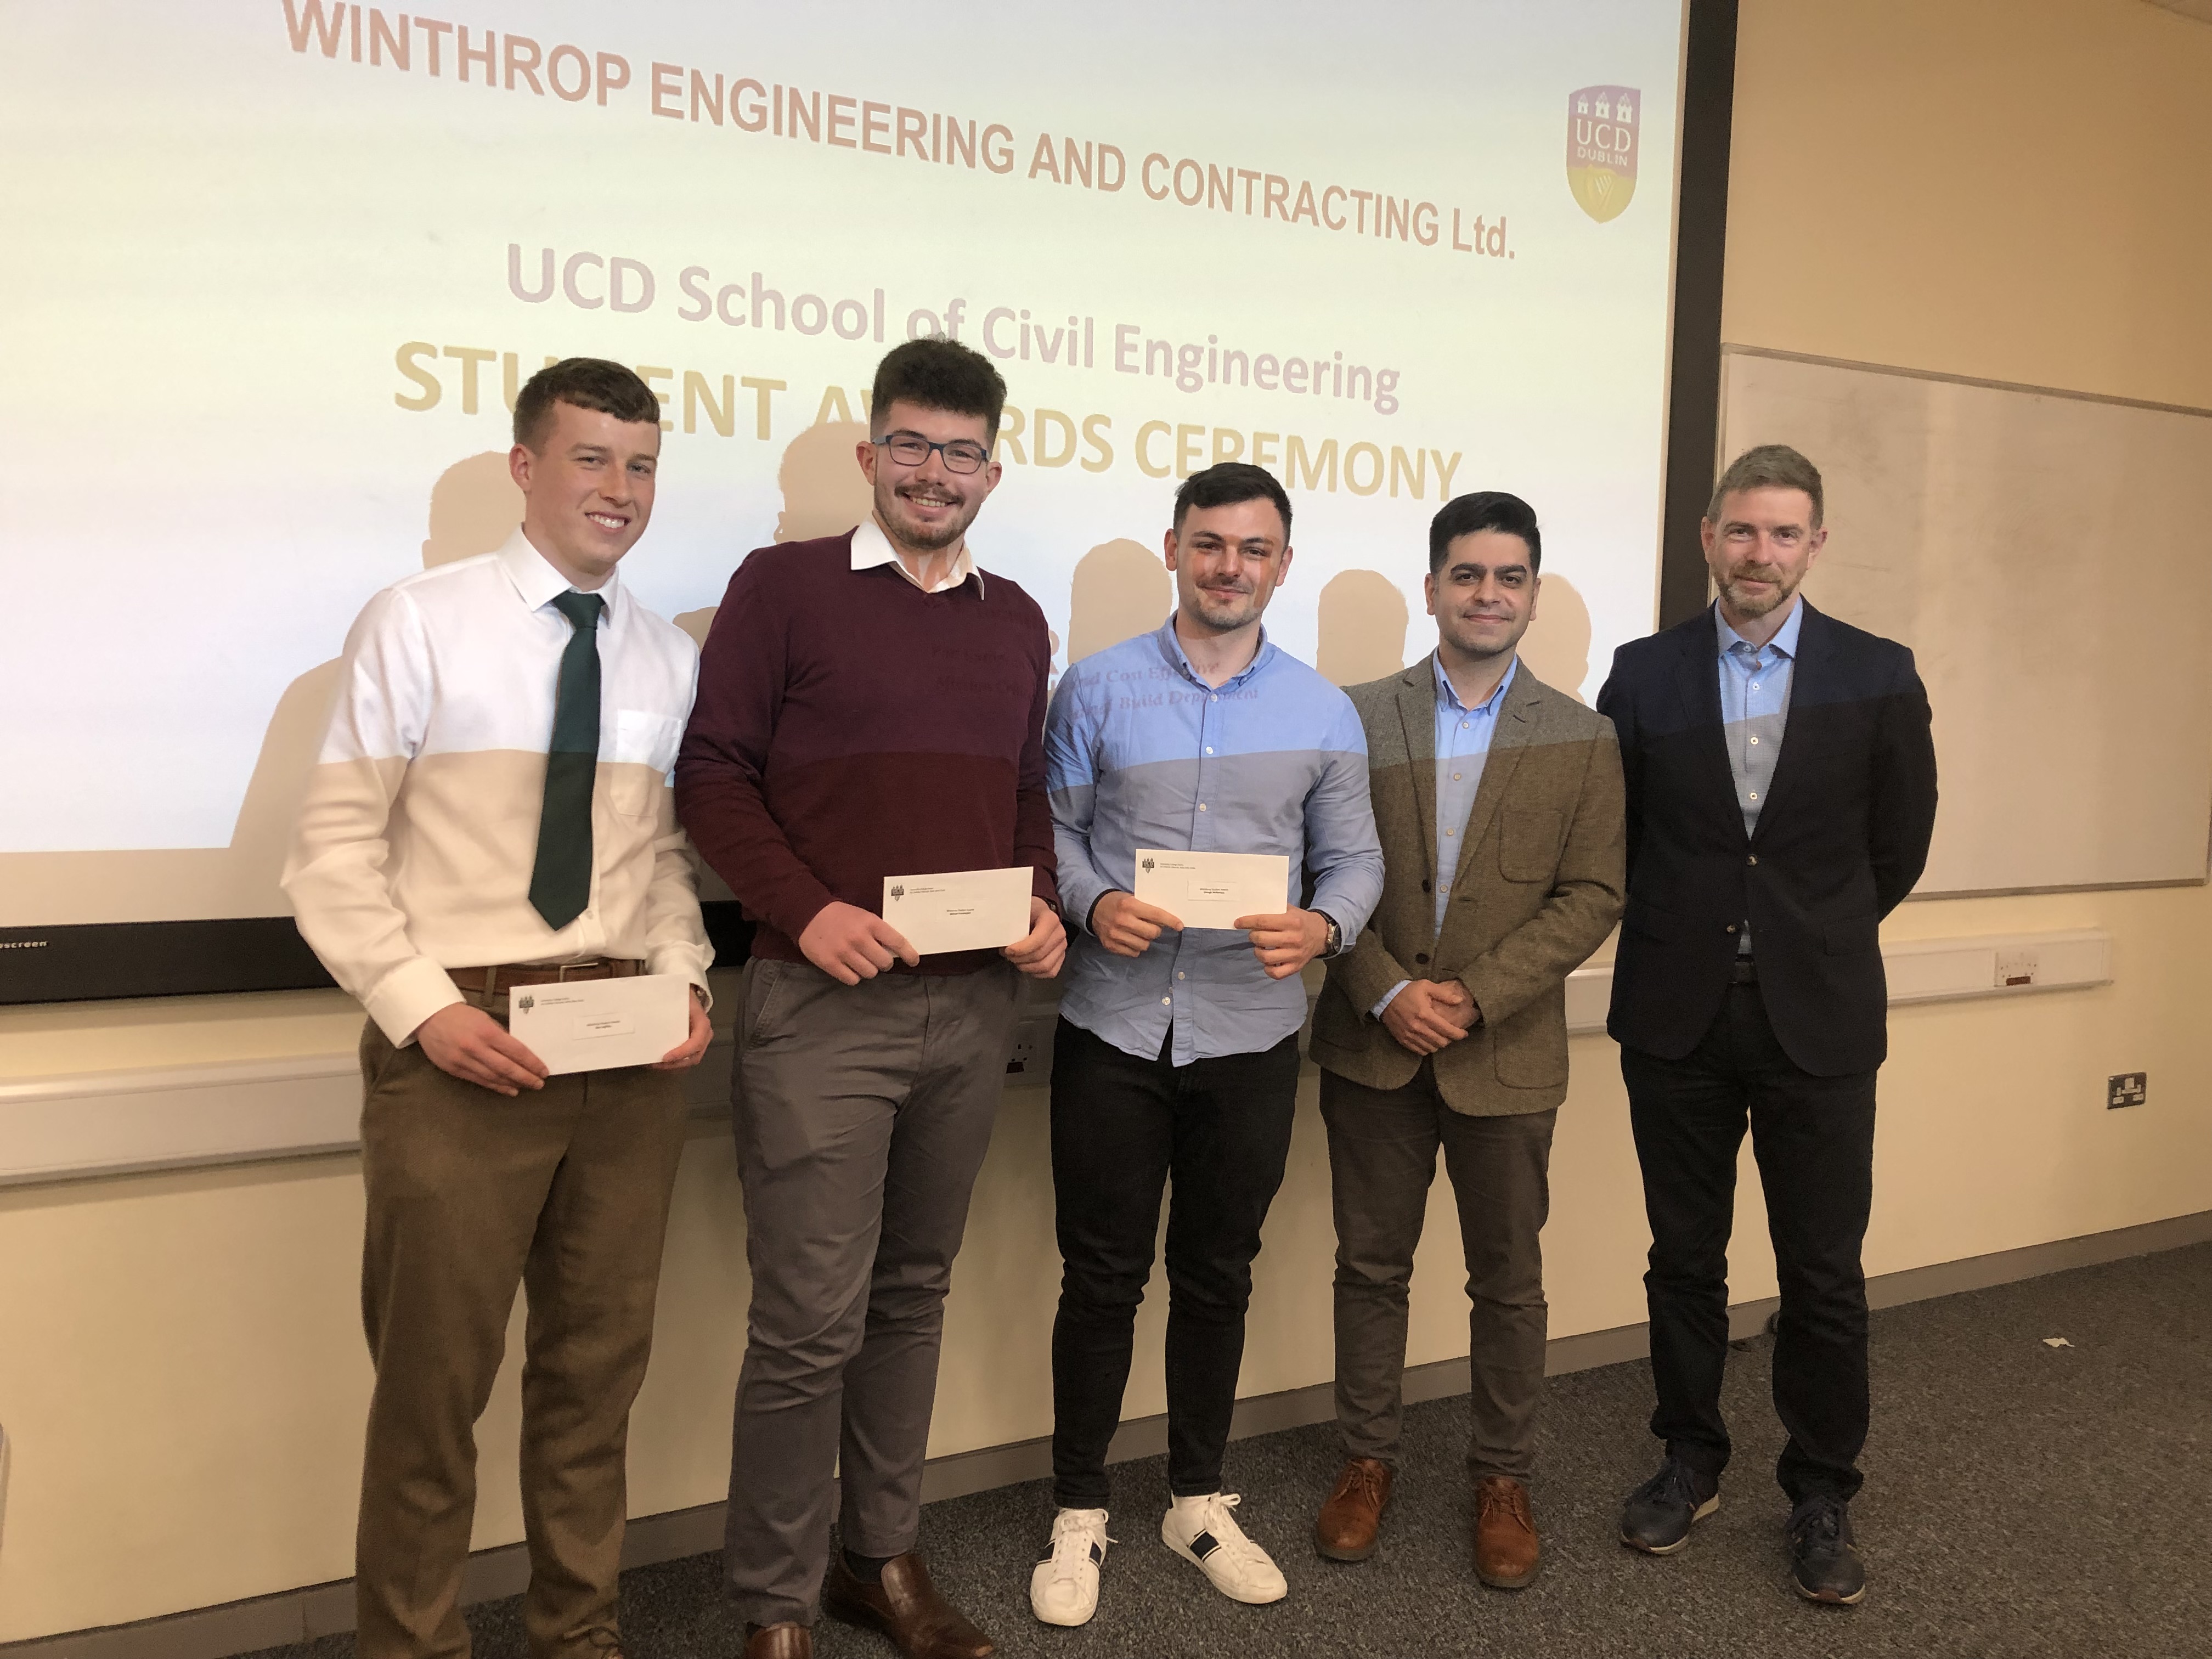 Winthrop Engineering Student Prizes